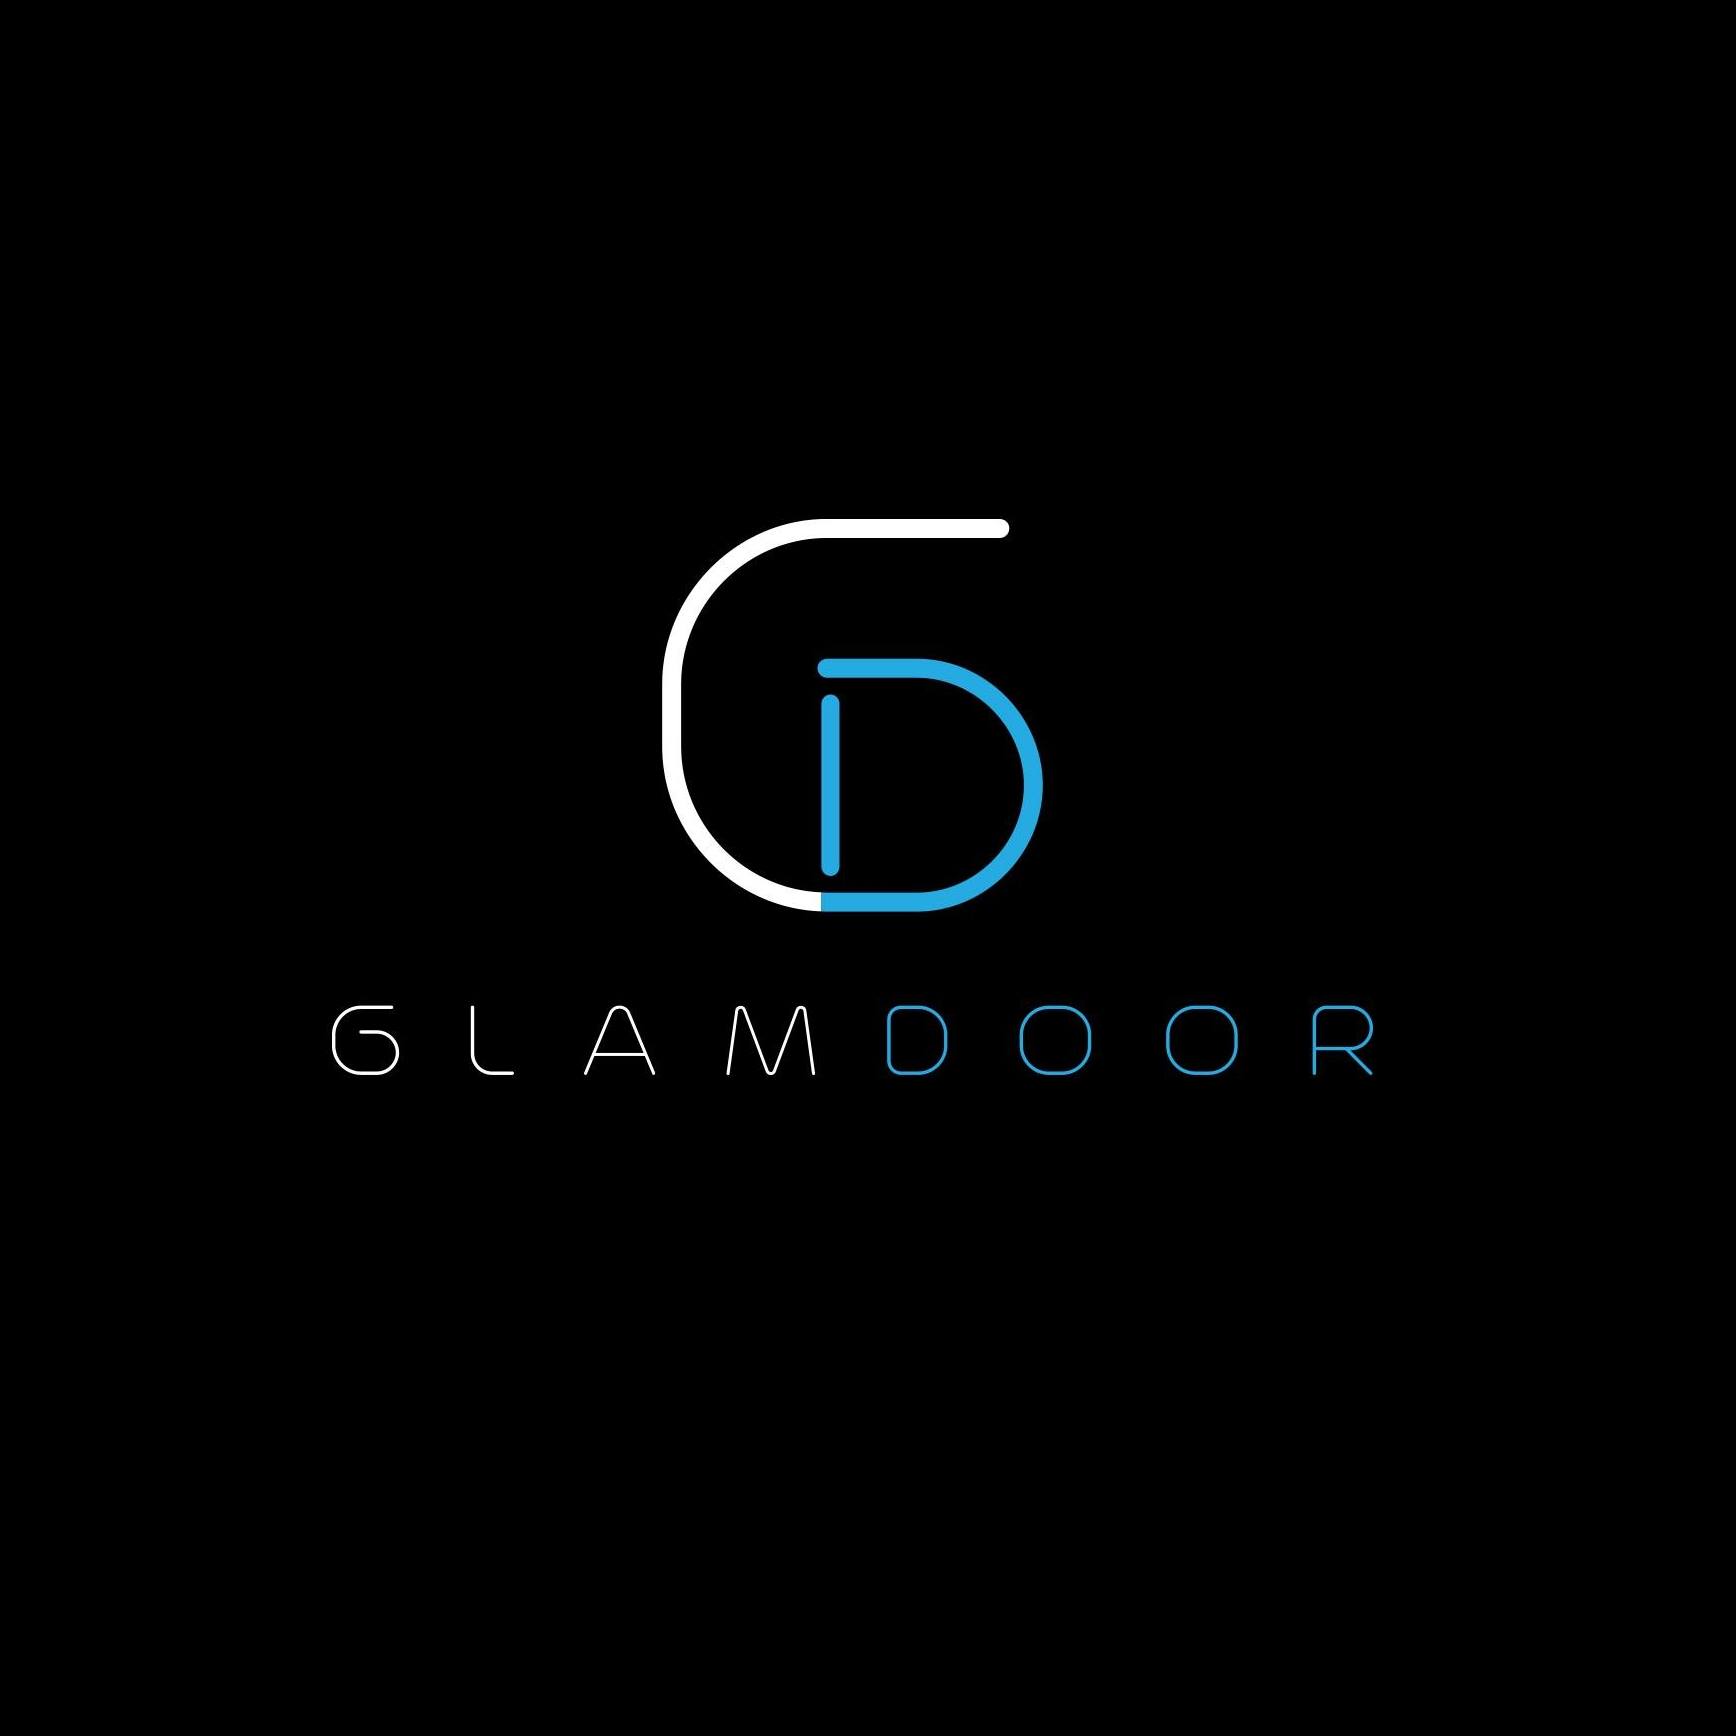 Glam Door Unisex Salon|Salon|Active Life